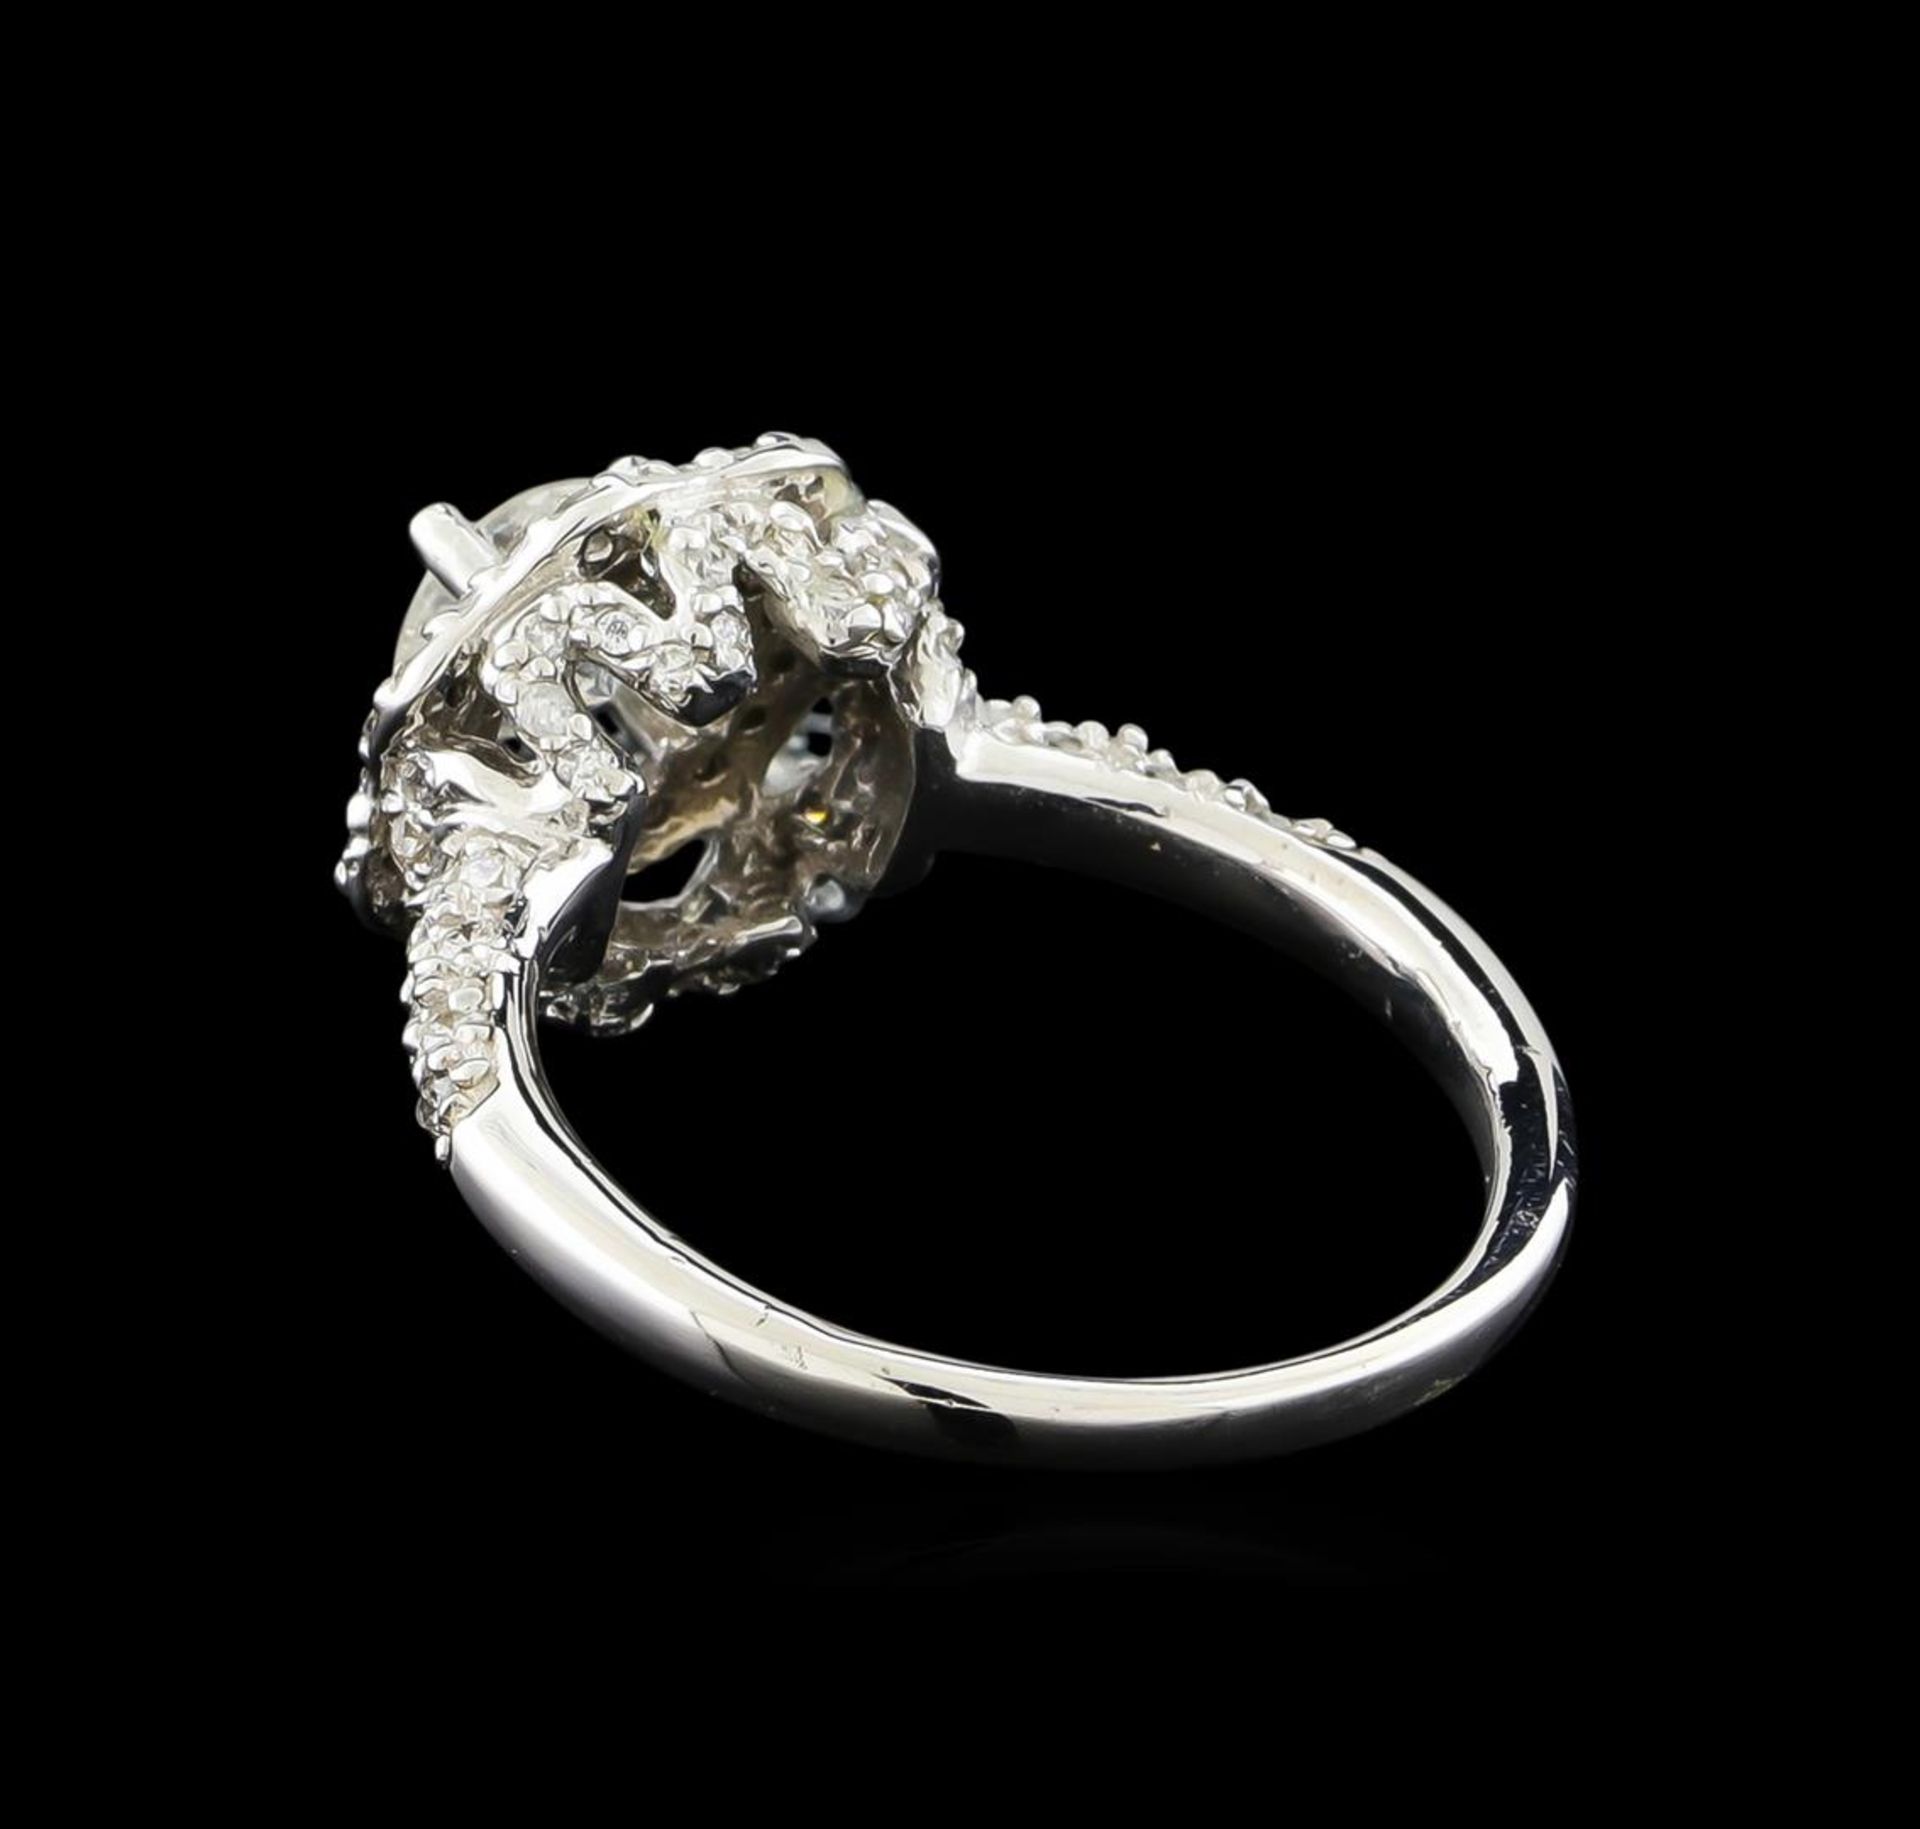 14KT White Gold 0.95 ctw Diamond Ring - Image 3 of 5